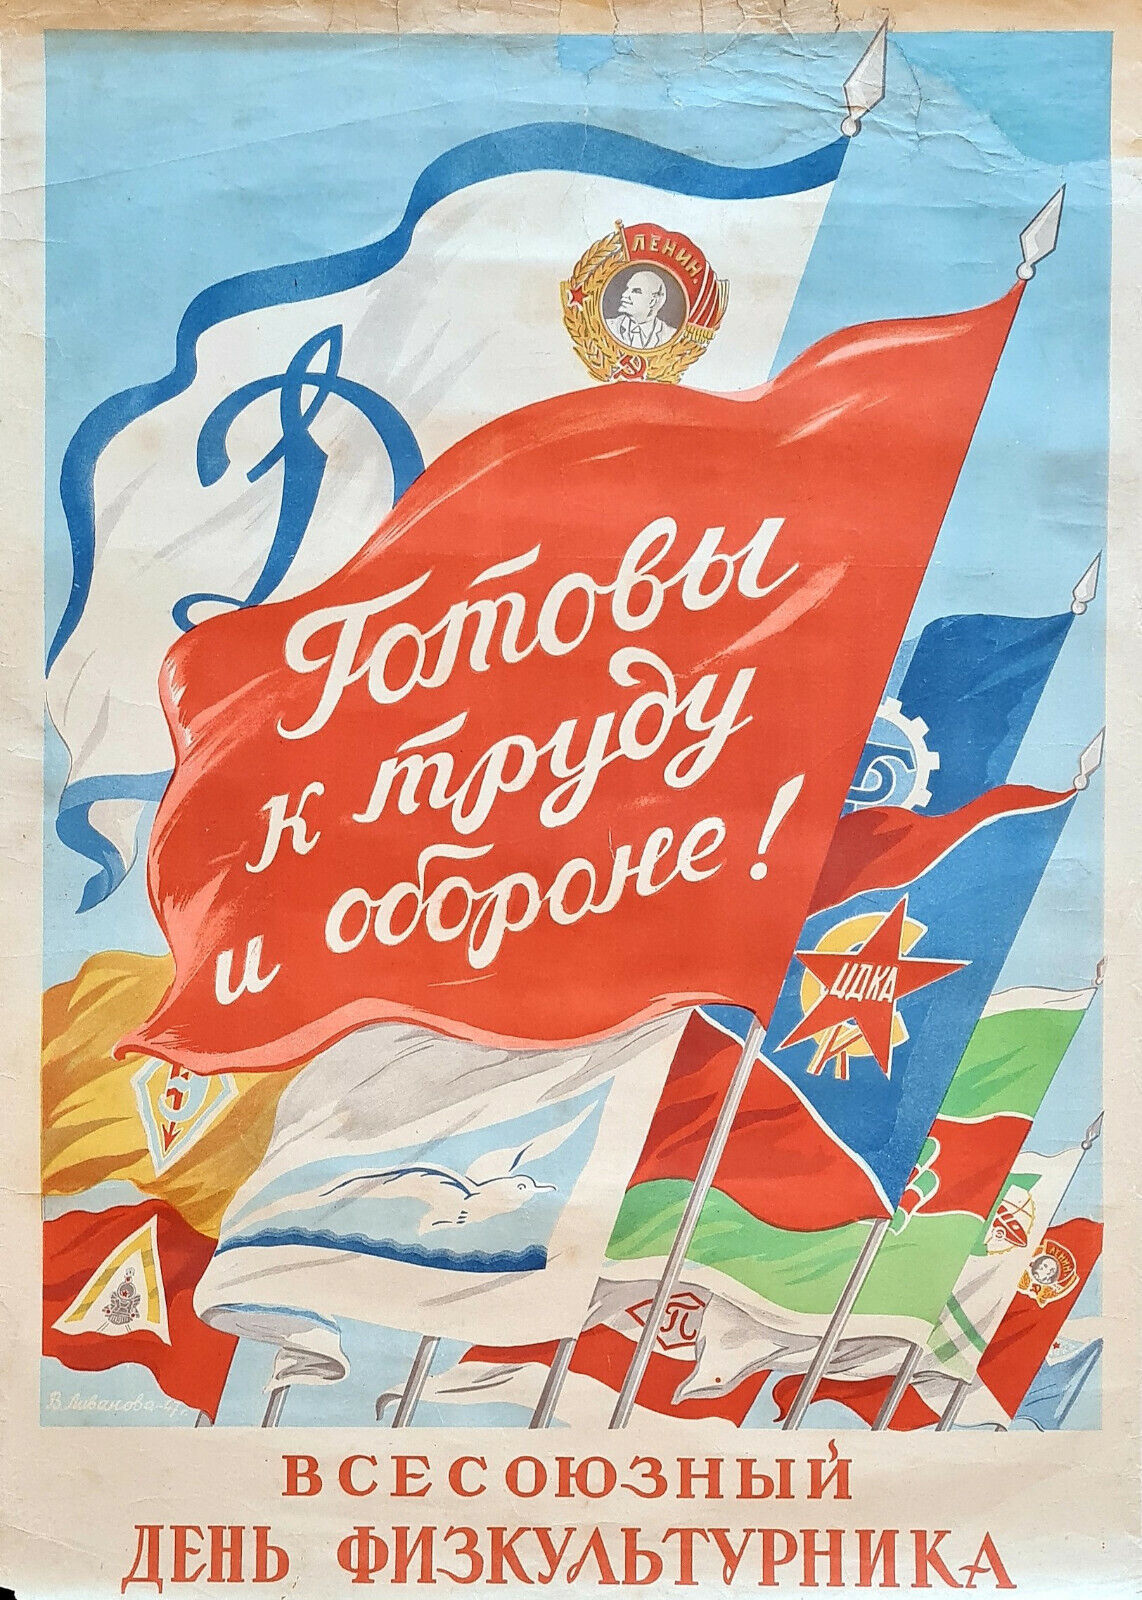 1947 SPORT ATHLETE DAY  STALIN VINTAGE WW2 RUSSIAN USSR SOVIET PROPAGANDA POSTER